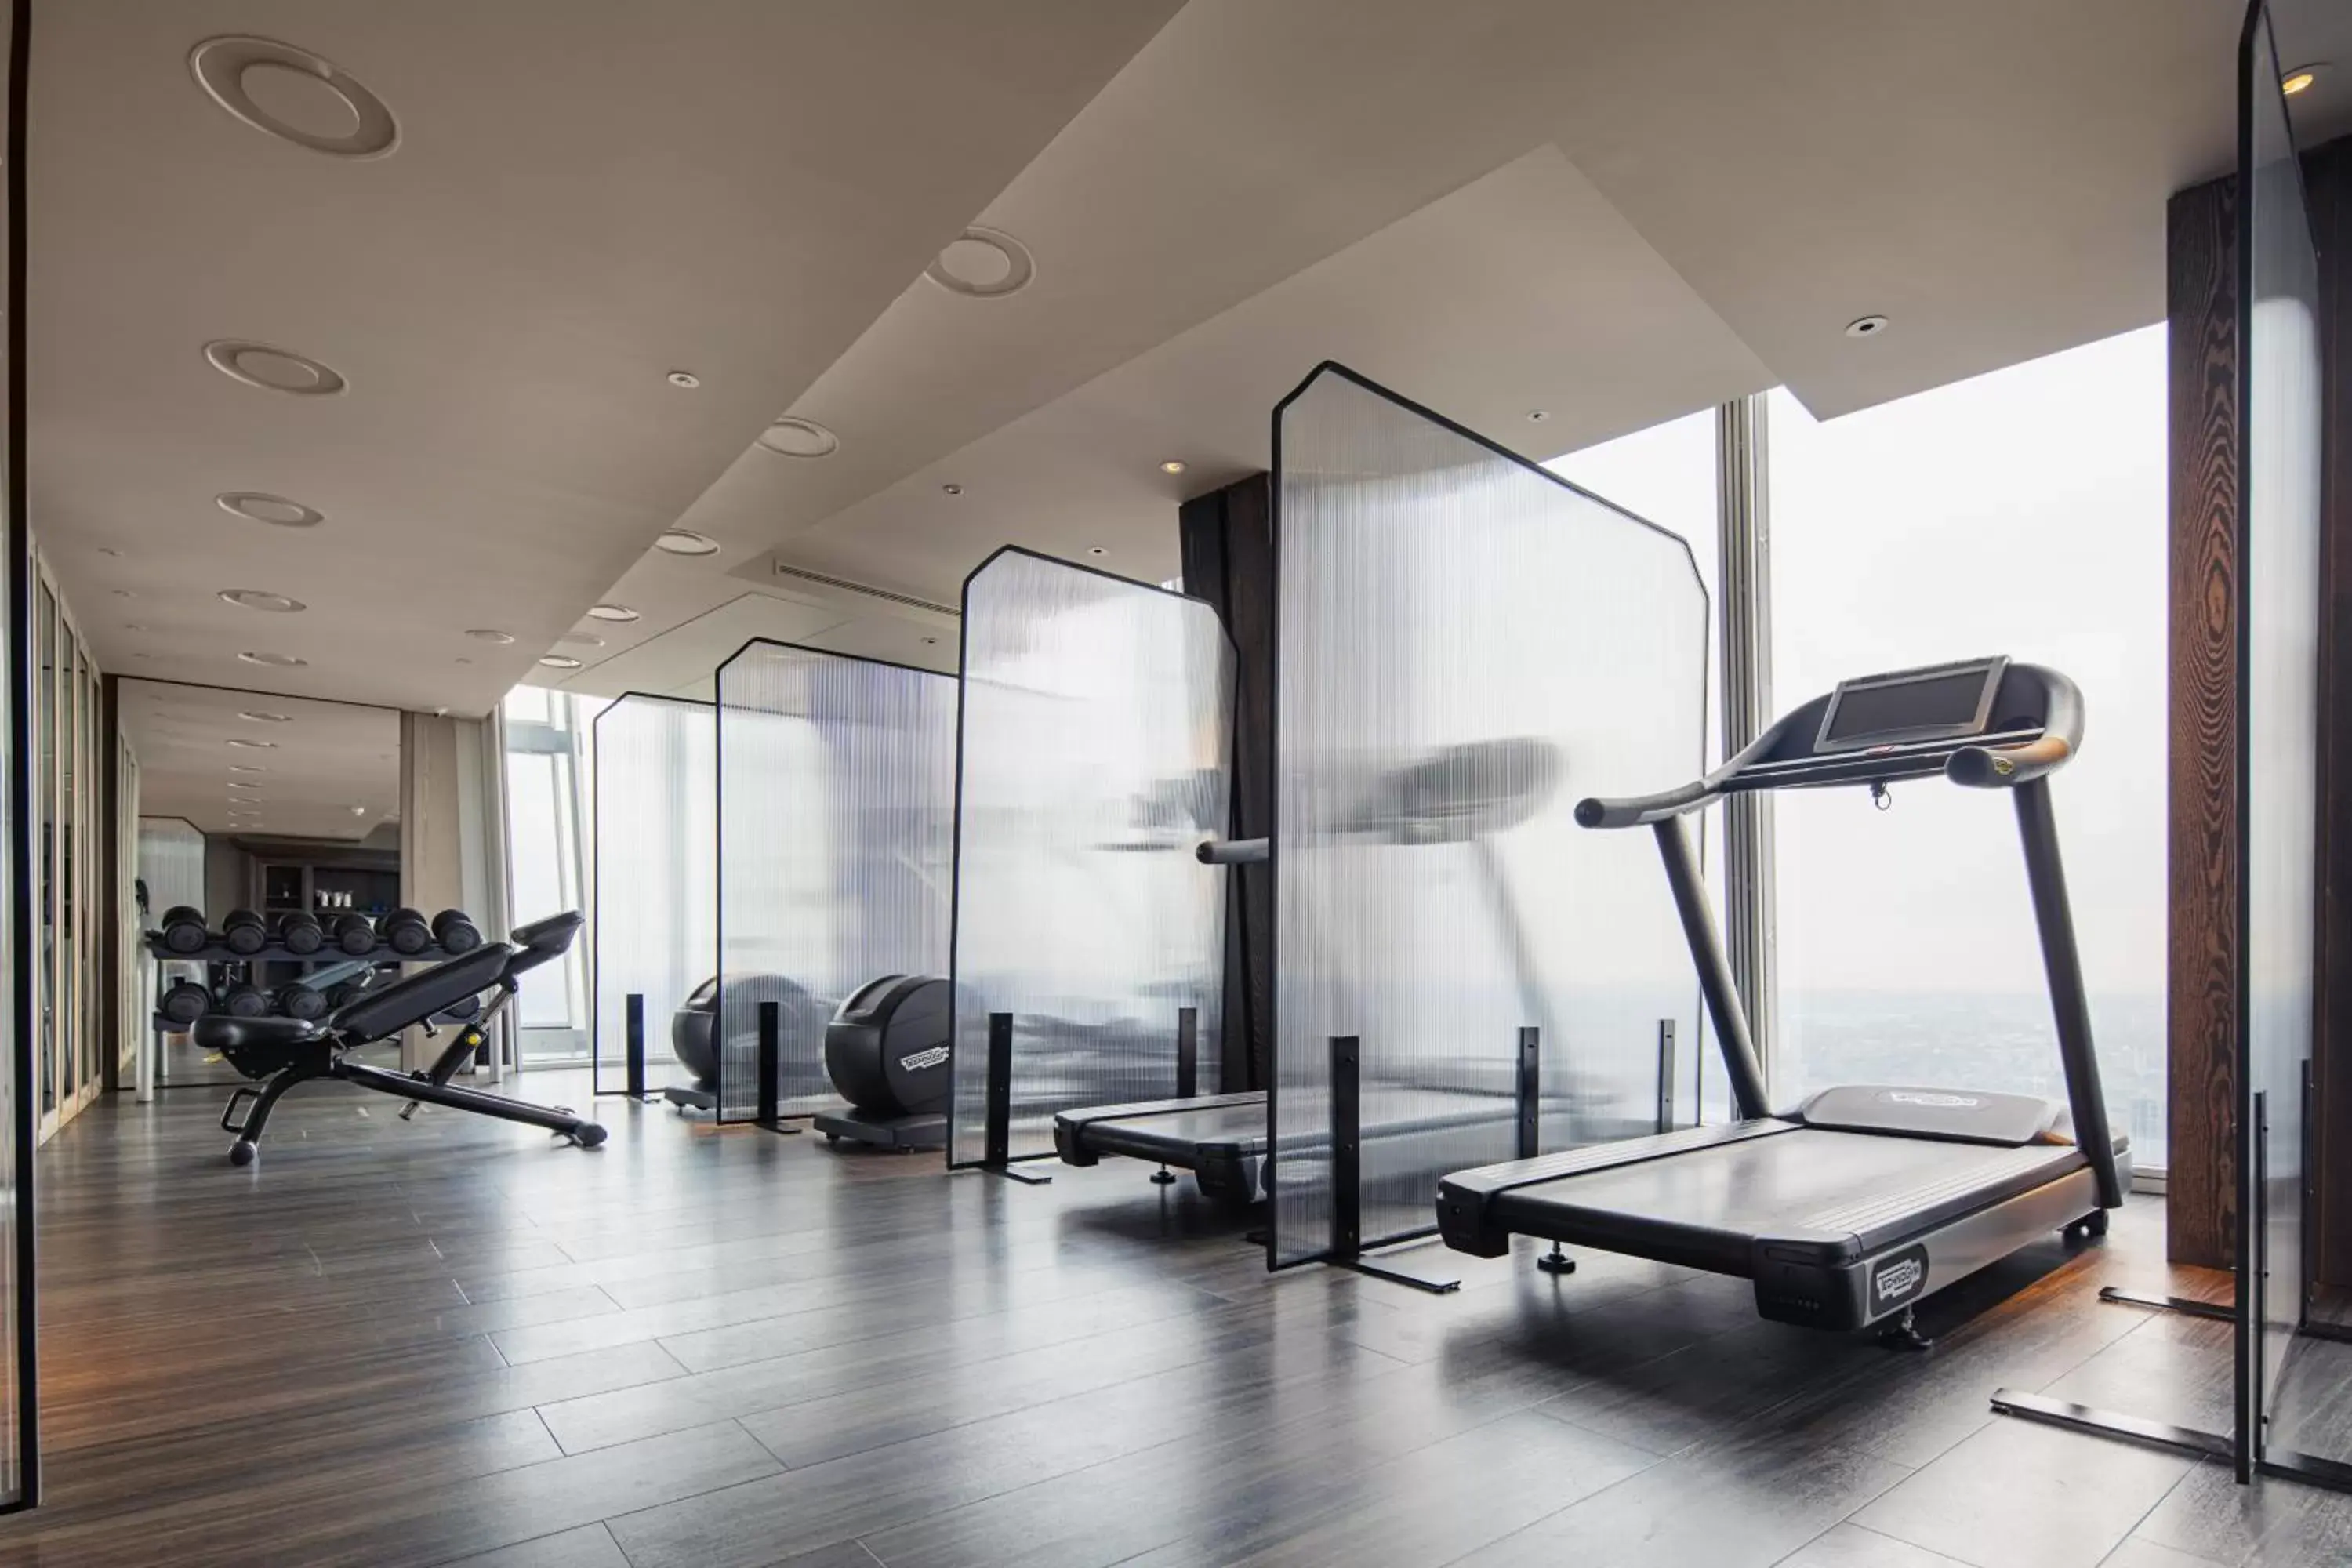 Fitness centre/facilities, Fitness Center/Facilities in Shangri-La The Shard, London